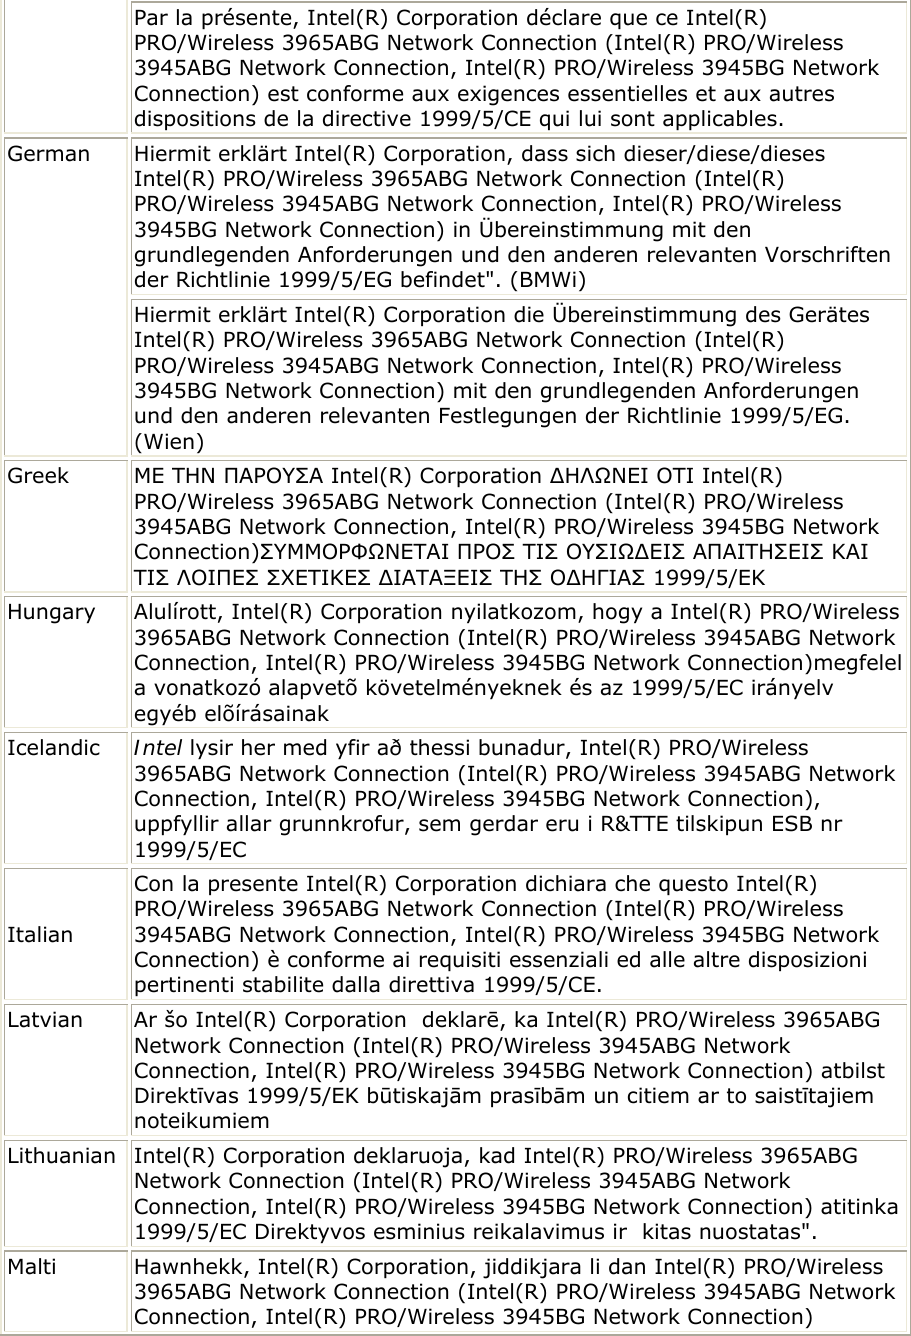 Par la présente, Intel(R) Corporation déclare que ce Intel(R) PRO/Wireless 3965ABG Network Connection (Intel(R) PRO/Wireless 3945ABG Network Connection, Intel(R) PRO/Wireless 3945BG Network Connection) est conforme aux exigences essentielles et aux autres dispositions de la directive 1999/5/CE qui lui sont applicables.  Hiermit erklärt Intel(R) Corporation, dass sich dieser/diese/dieses Intel(R) PRO/Wireless 3965ABG Network Connection (Intel(R) PRO/Wireless 3945ABG Network Connection, Intel(R) PRO/Wireless 3945BG Network Connection) in Übereinstimmung mit den grundlegenden Anforderungen und den anderen relevanten Vorschriften der Richtlinie 1999/5/EG befindet&quot;. (BMWi) German Hiermit erklärt Intel(R) Corporation die Übereinstimmung des Gerätes Intel(R) PRO/Wireless 3965ABG Network Connection (Intel(R) PRO/Wireless 3945ABG Network Connection, Intel(R) PRO/Wireless 3945BG Network Connection) mit den grundlegenden Anforderungen und den anderen relevanten Festlegungen der Richtlinie 1999/5/EG. (Wien) Greek  ΜΕ ΤΗΝ ΠΑΡΟΥΣΑ Intel(R) Corporation ΔΗΛΩΝΕΙ ΟΤΙ Intel(R) PRO/Wireless 3965ABG Network Connection (Intel(R) PRO/Wireless 3945ABG Network Connection, Intel(R) PRO/Wireless 3945BG Network Connection)ΣΥΜΜΟΡΦΩΝΕΤΑΙ ΠΡΟΣ ΤΙΣ ΟΥΣΙΩΔΕΙΣ ΑΠΑΙΤΗΣΕΙΣ ΚΑΙ ΤΙΣ ΛΟΙΠΕΣ ΣΧΕΤΙΚΕΣ ΔΙΑΤΑΞΕΙΣ ΤΗΣ ΟΔΗΓΙΑΣ 1999/5/ΕΚ Hungary  Alulírott, Intel(R) Corporation nyilatkozom, hogy a Intel(R) PRO/Wireless 3965ABG Network Connection (Intel(R) PRO/Wireless 3945ABG Network Connection, Intel(R) PRO/Wireless 3945BG Network Connection)megfelel a vonatkozó alapvetõ követelményeknek és az 1999/5/EC irányelv egyéb elõírásainak Icelandic   Intel lysir her med yfir að thessi bunadur, Intel(R) PRO/Wireless 3965ABG Network Connection (Intel(R) PRO/Wireless 3945ABG Network Connection, Intel(R) PRO/Wireless 3945BG Network Connection), uppfyllir allar grunnkrofur, sem gerdar eru i R&amp;TTE tilskipun ESB nr 1999/5/EC  Italian Con la presente Intel(R) Corporation dichiara che questo Intel(R) PRO/Wireless 3965ABG Network Connection (Intel(R) PRO/Wireless 3945ABG Network Connection, Intel(R) PRO/Wireless 3945BG Network Connection) è conforme ai requisiti essenziali ed alle altre disposizioni pertinenti stabilite dalla direttiva 1999/5/CE.  Latvian  Ar šo Intel(R) Corporation  deklarē, ka Intel(R) PRO/Wireless 3965ABG Network Connection (Intel(R) PRO/Wireless 3945ABG Network Connection, Intel(R) PRO/Wireless 3945BG Network Connection) atbilst Direktīvas 1999/5/EK būtiskajām prasībām un citiem ar to saistītajiem noteikumiem Lithuanian Intel(R) Corporation deklaruoja, kad Intel(R) PRO/Wireless 3965ABG Network Connection (Intel(R) PRO/Wireless 3945ABG Network Connection, Intel(R) PRO/Wireless 3945BG Network Connection) atitinka 1999/5/EC Direktyvos esminius reikalavimus ir  kitas nuostatas&quot;. Malti  Hawnhekk, Intel(R) Corporation, jiddikjara li dan Intel(R) PRO/Wireless 3965ABG Network Connection (Intel(R) PRO/Wireless 3945ABG Network Connection, Intel(R) PRO/Wireless 3945BG Network Connection) 